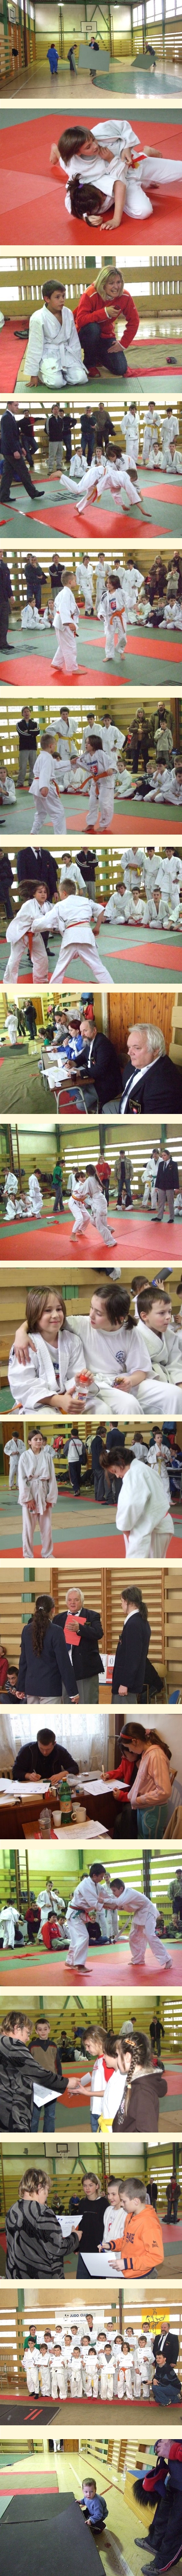 judo Roznava